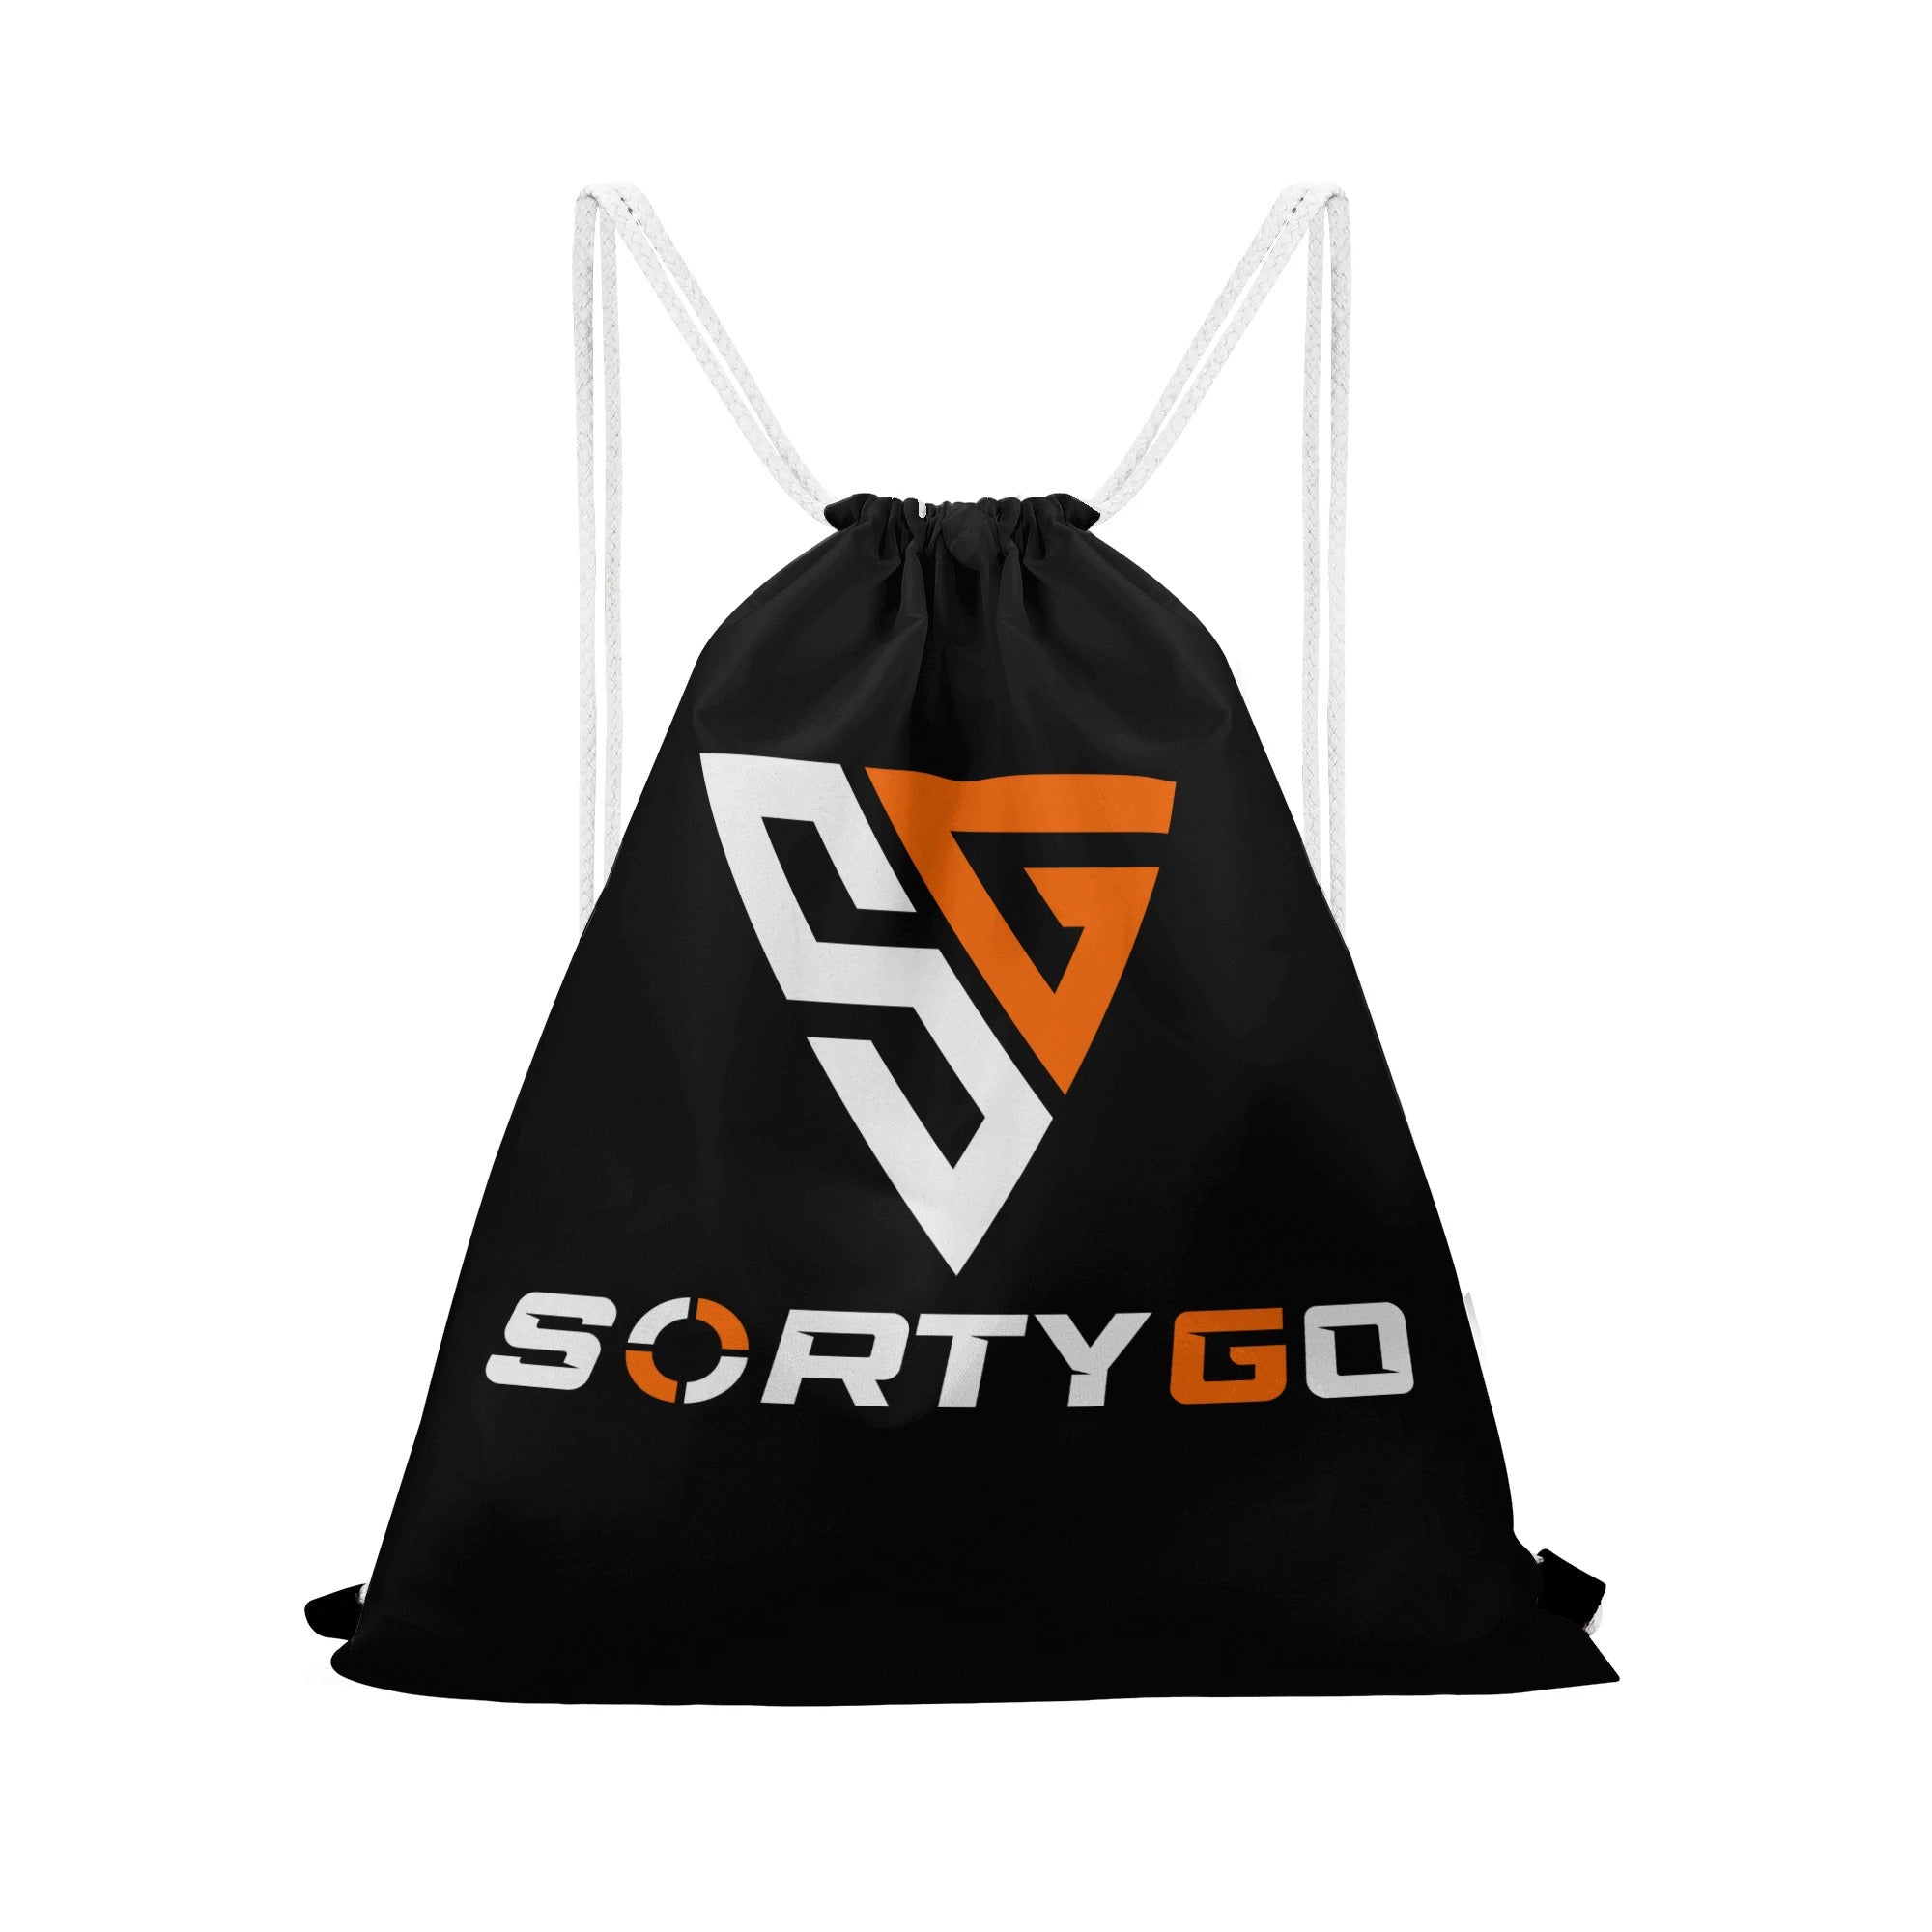 SORTYGO - Oceanic Drawstring Bag in